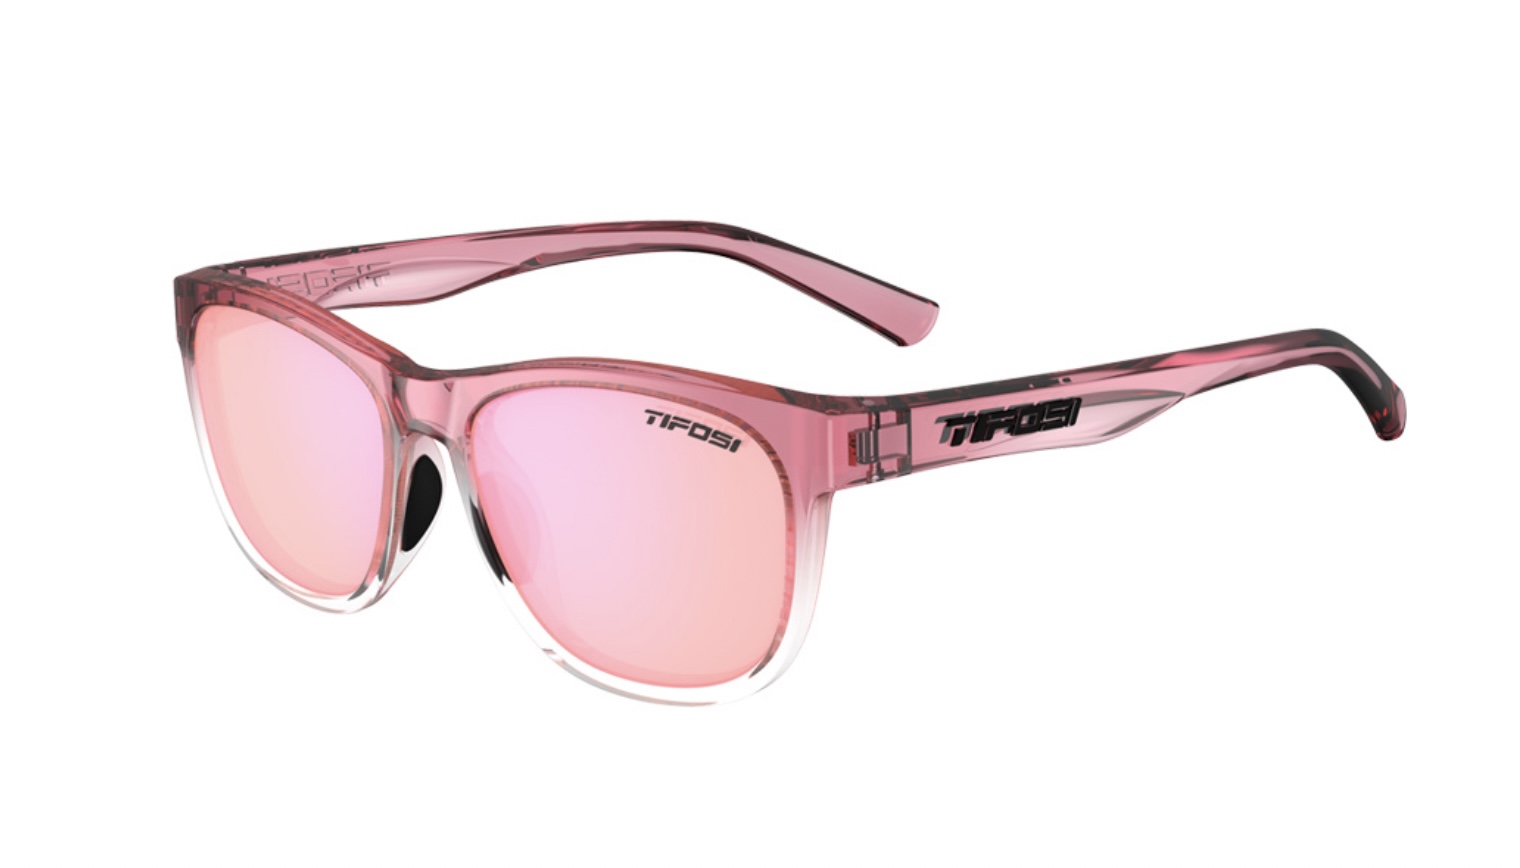 Prescription Fishing Sunglasses - Top 25 Polarized Fishing Sunglasses